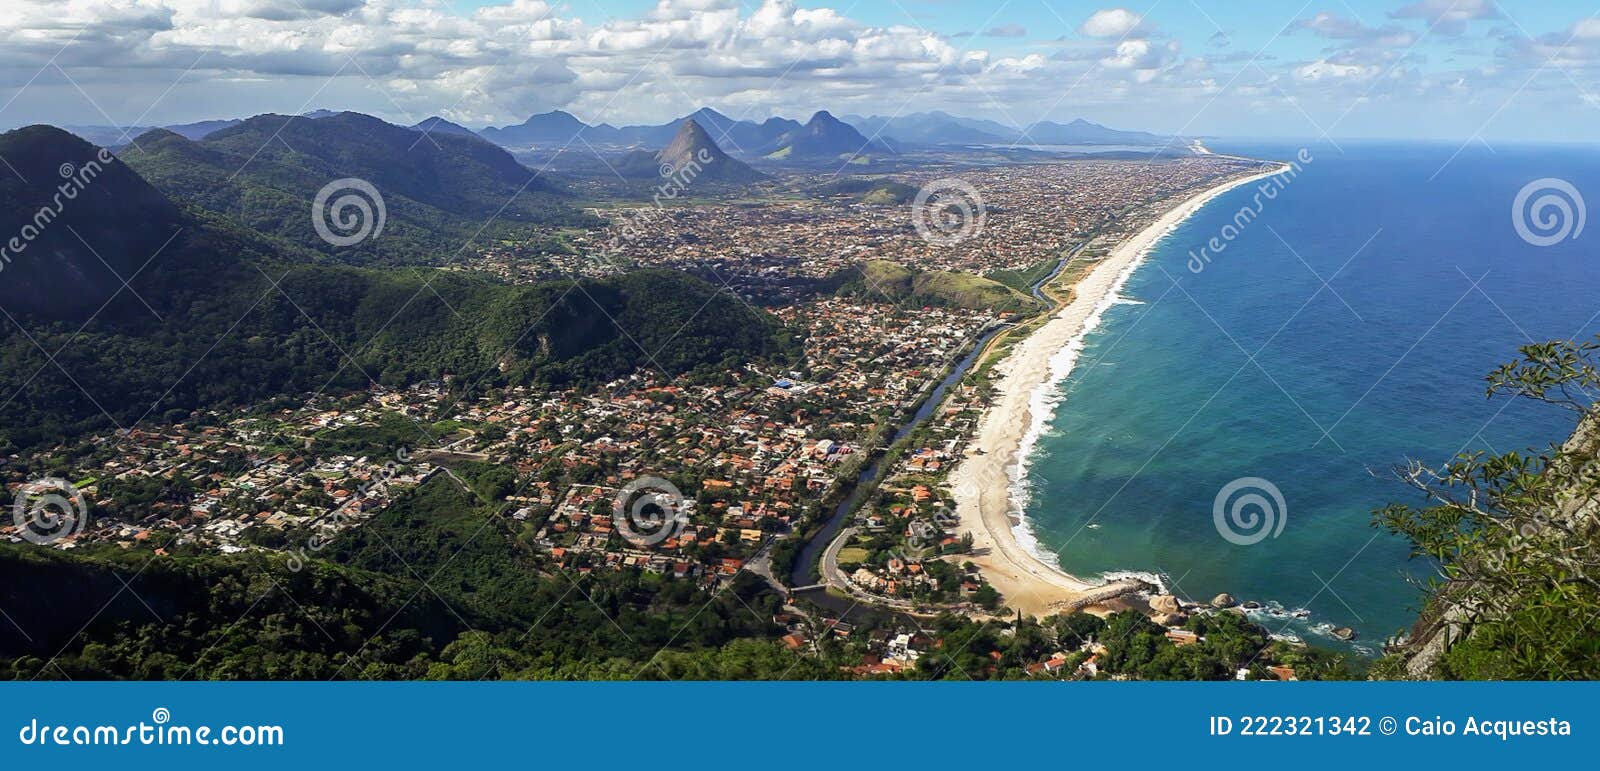 panoramic view of the coastal city of marica, rio de janeiro, brazil, facing the atlantic ocean. brazilian coast and sea. from the